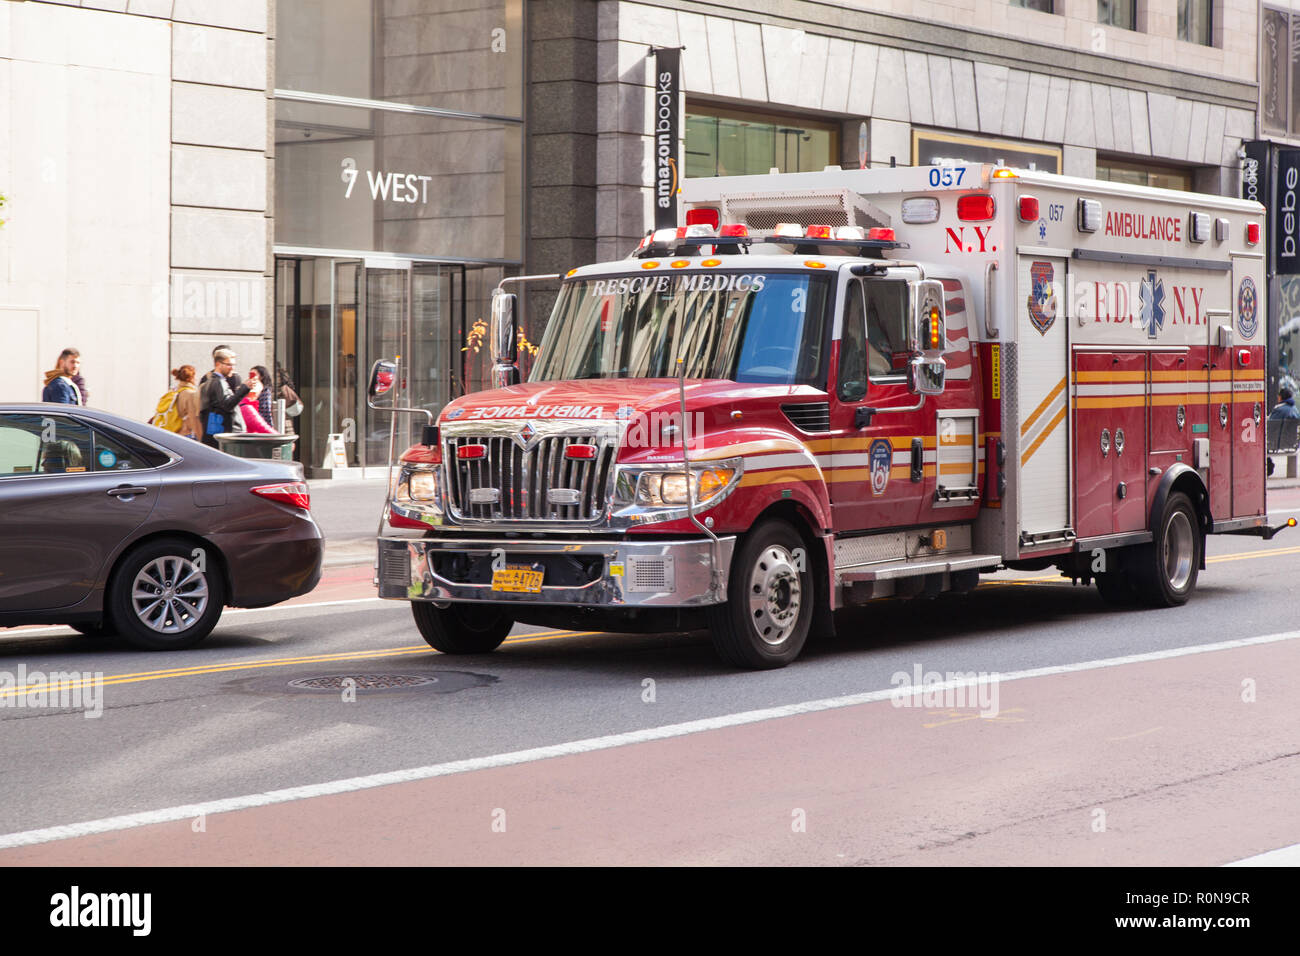 New York Fire Department camion ambulance, Manhattan, New York City, États-Unis d'Amérique. USA. Banque D'Images